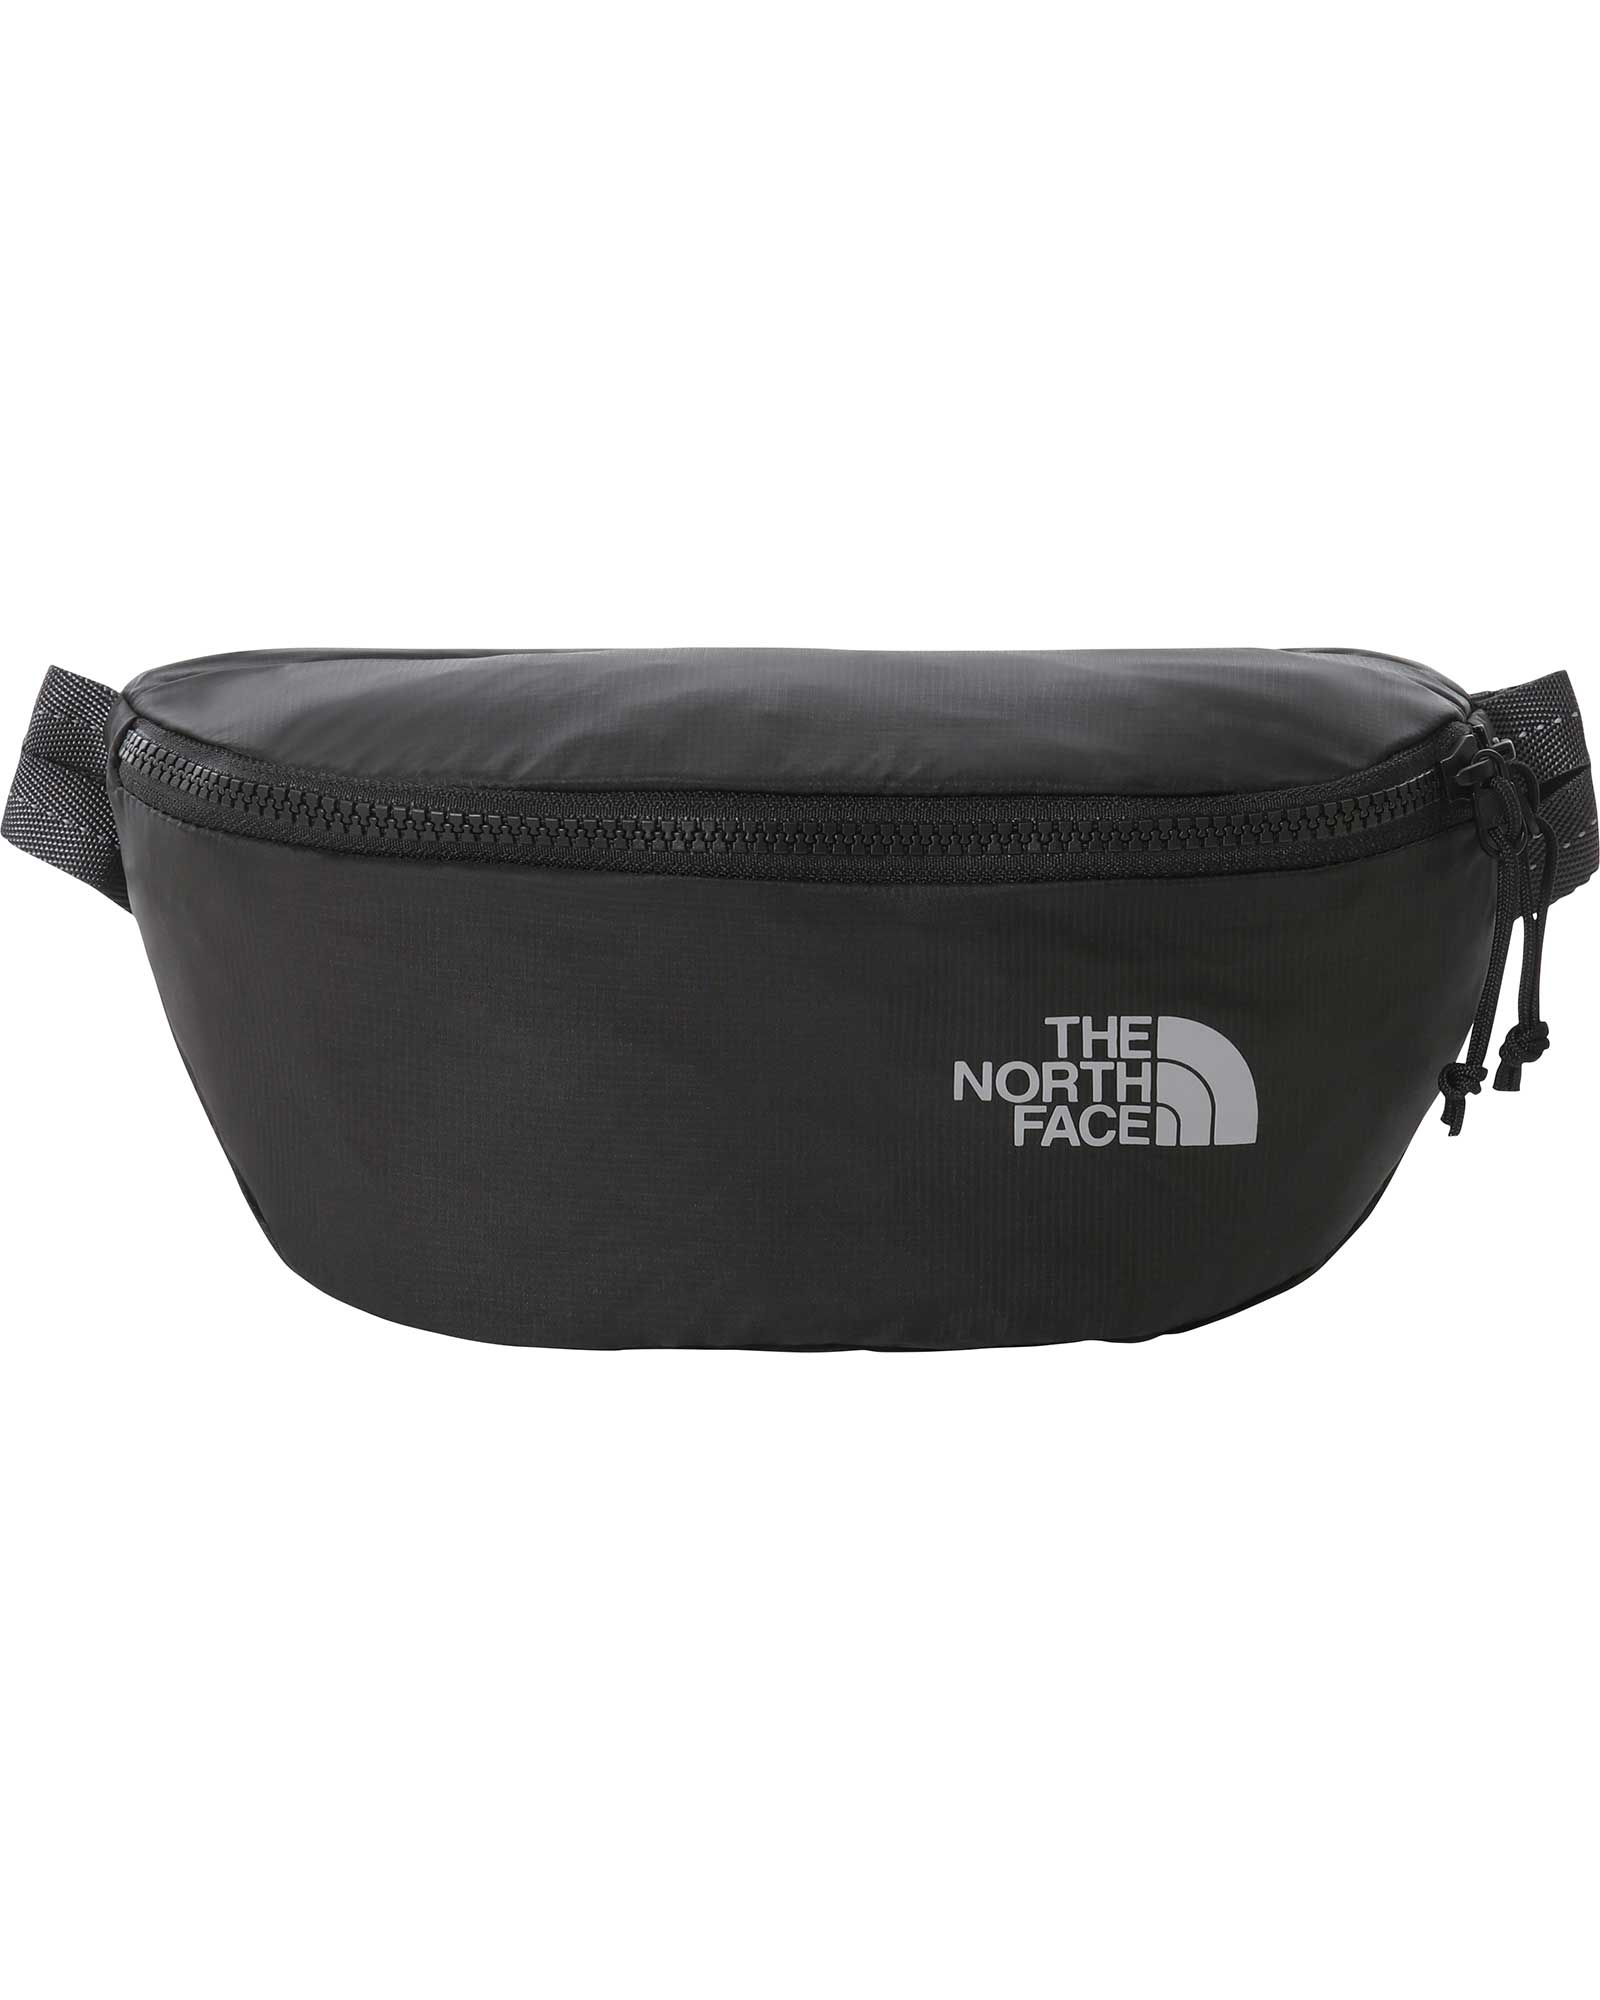 The North Face Flyweight Lumbar Bag - Asphalt Grey/TNF Black